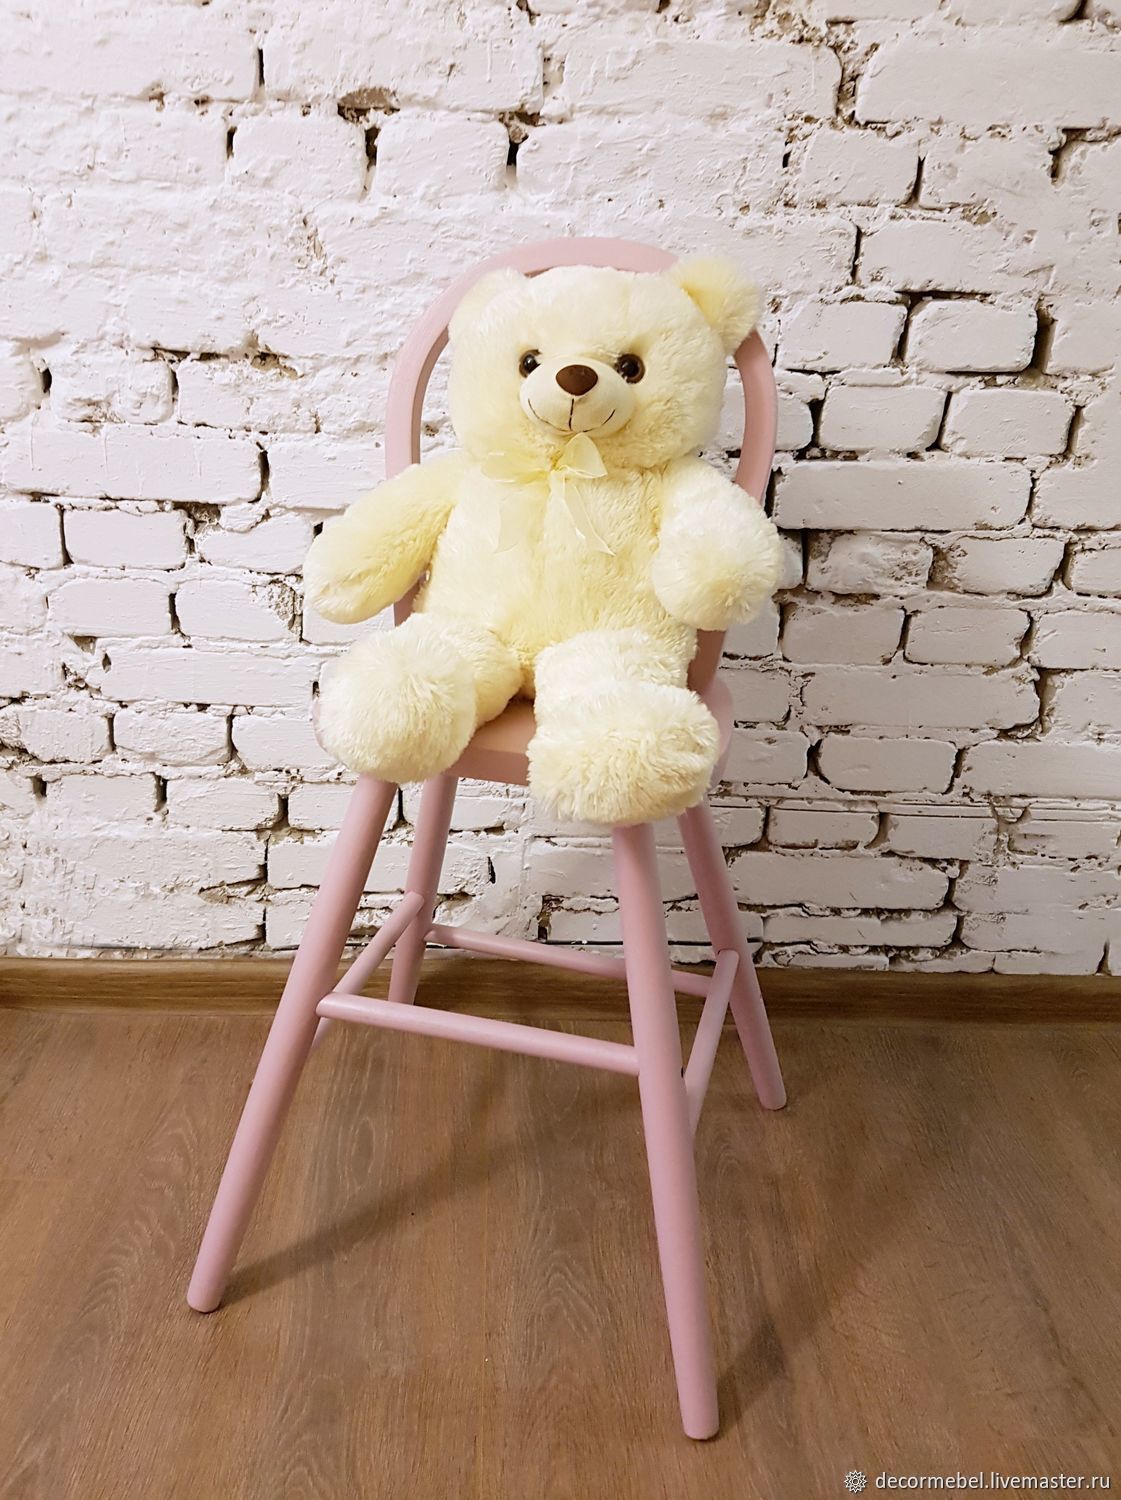 Розовый стул на колесиках для девочки